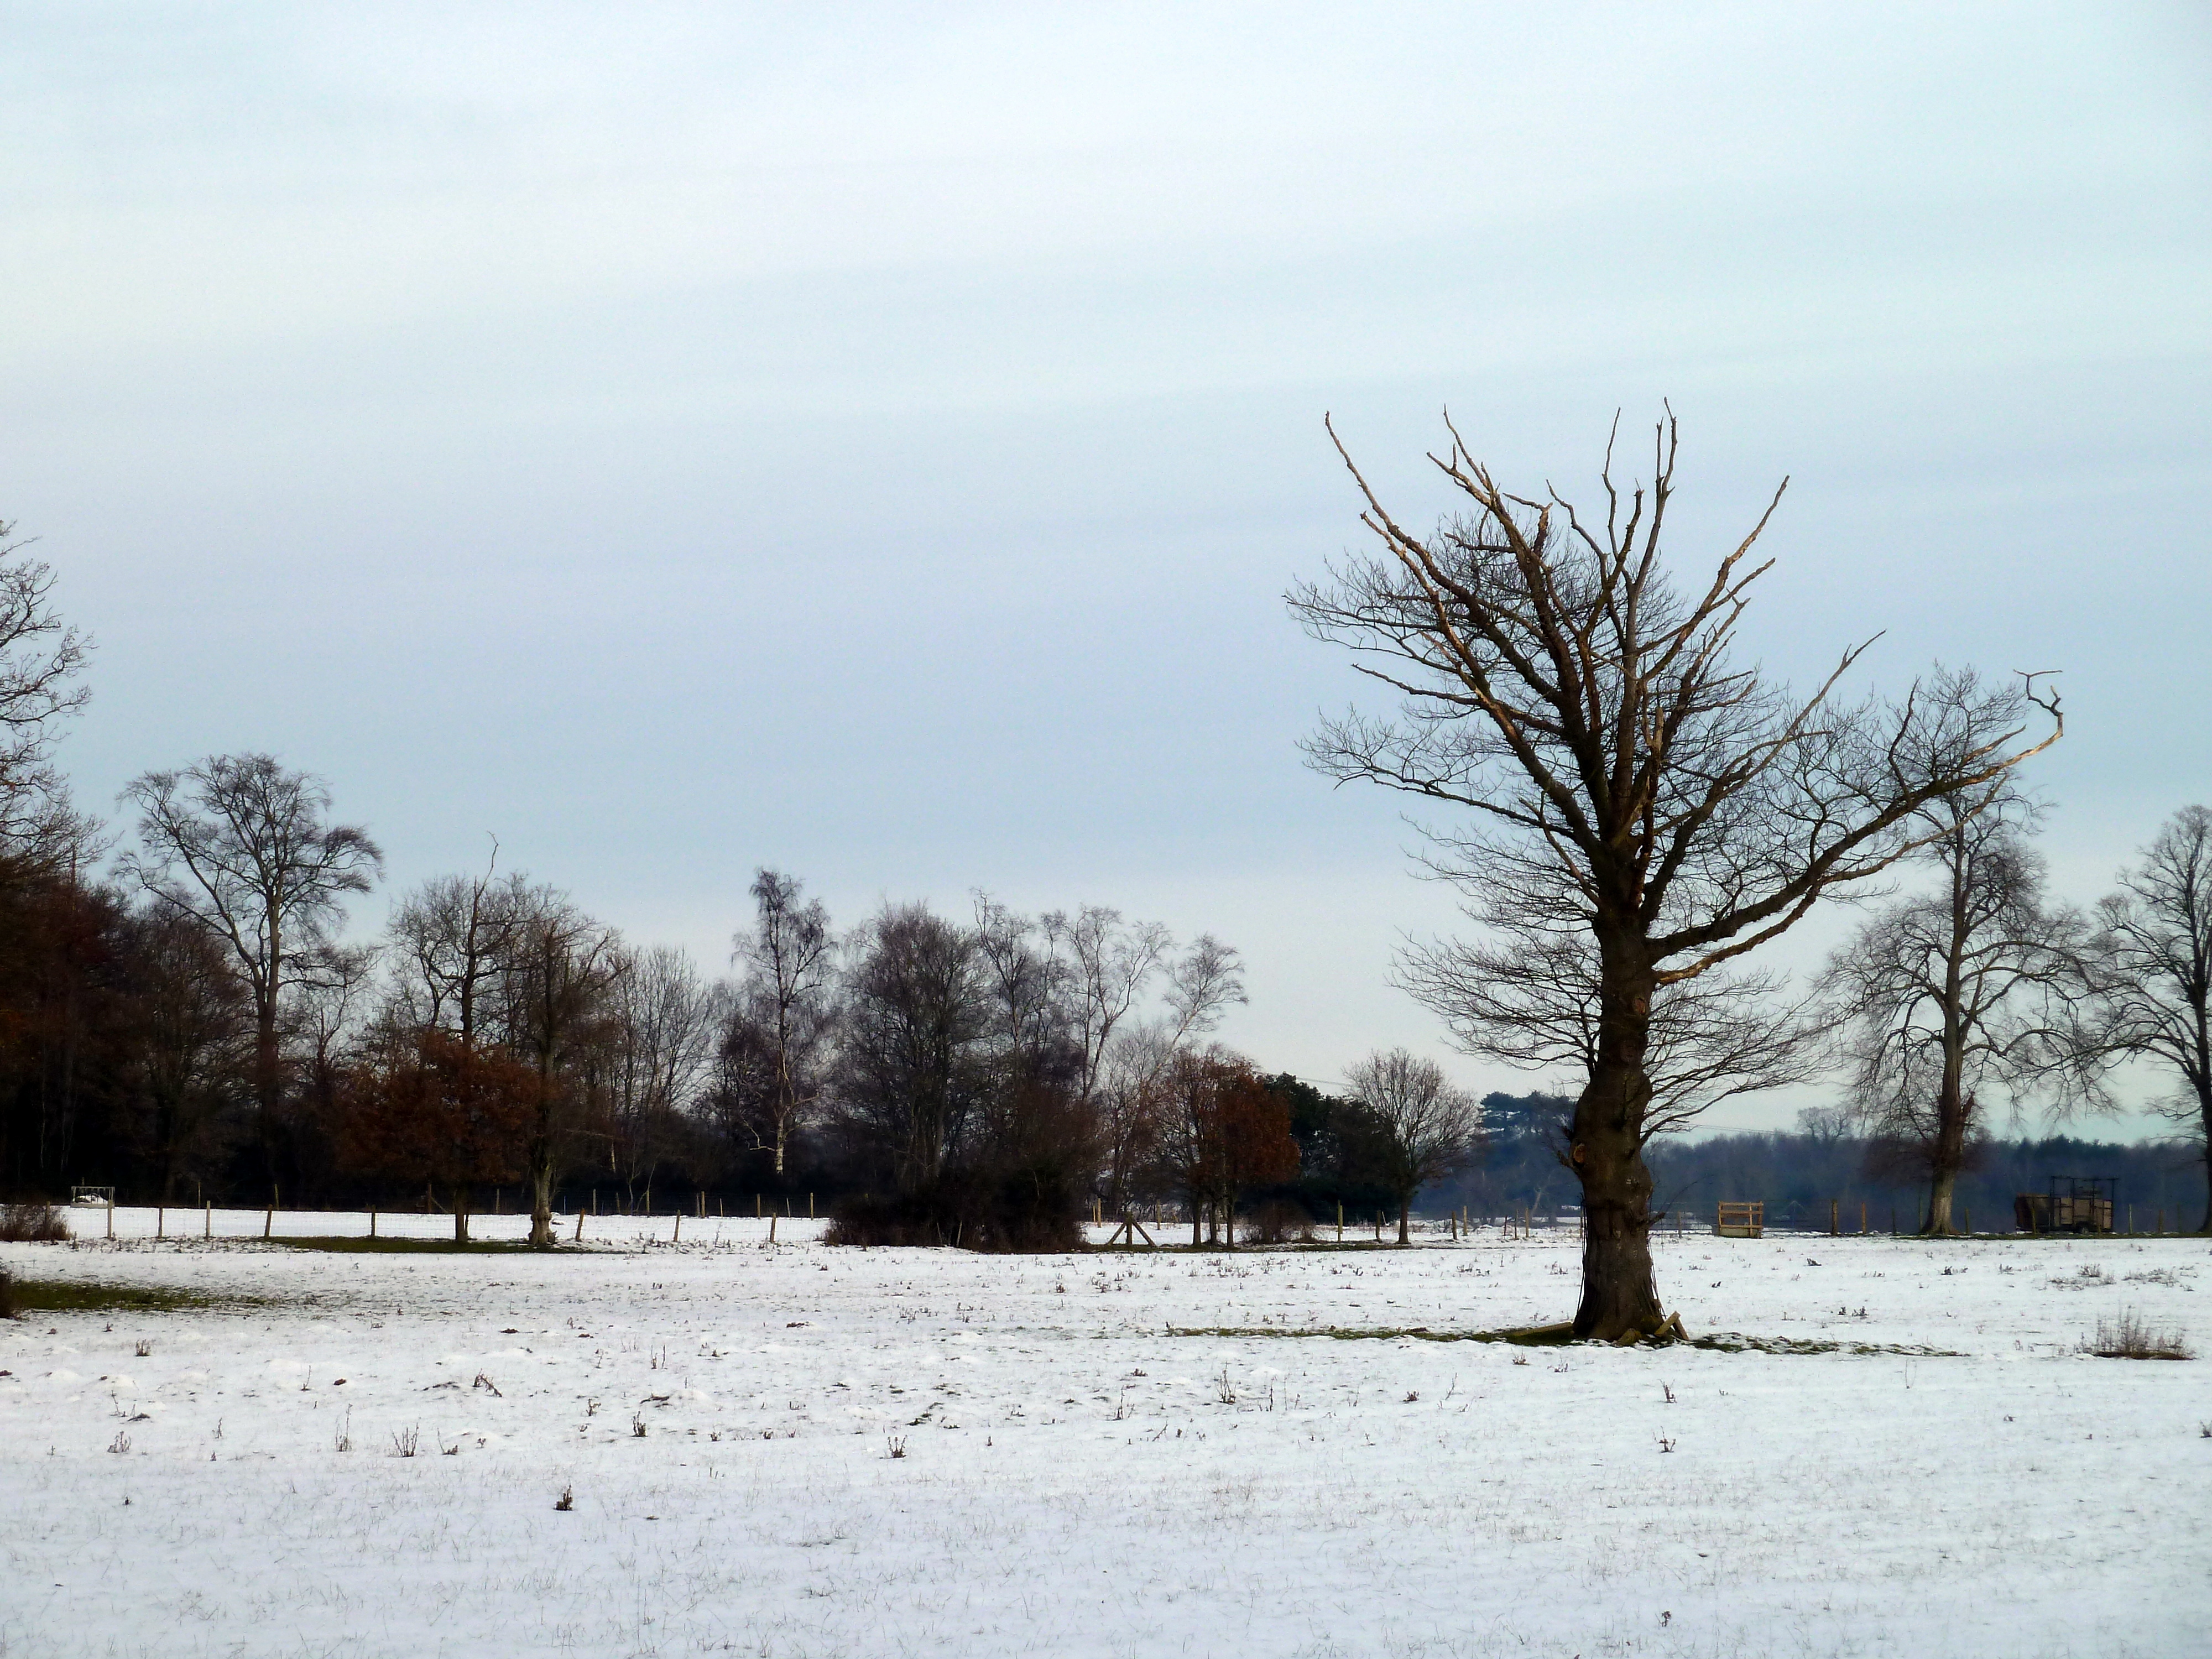 File:Bare trees in winter.jpg - Wikimedia Commons